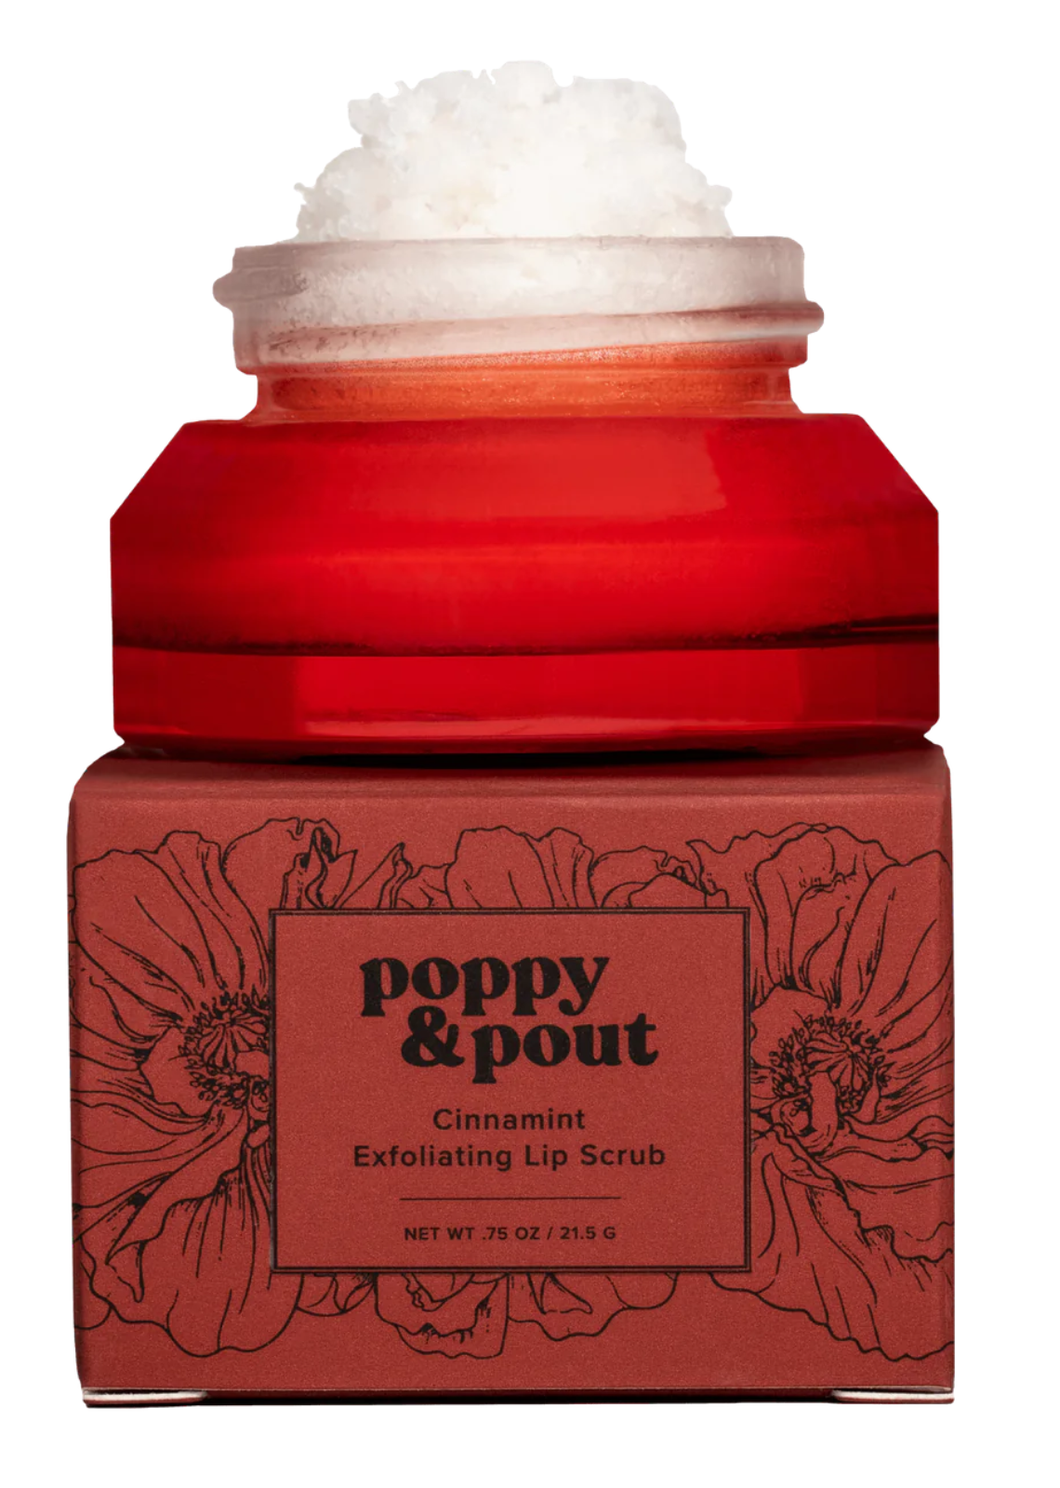 Poppy & Pout Lip Scrub, Cinnamint